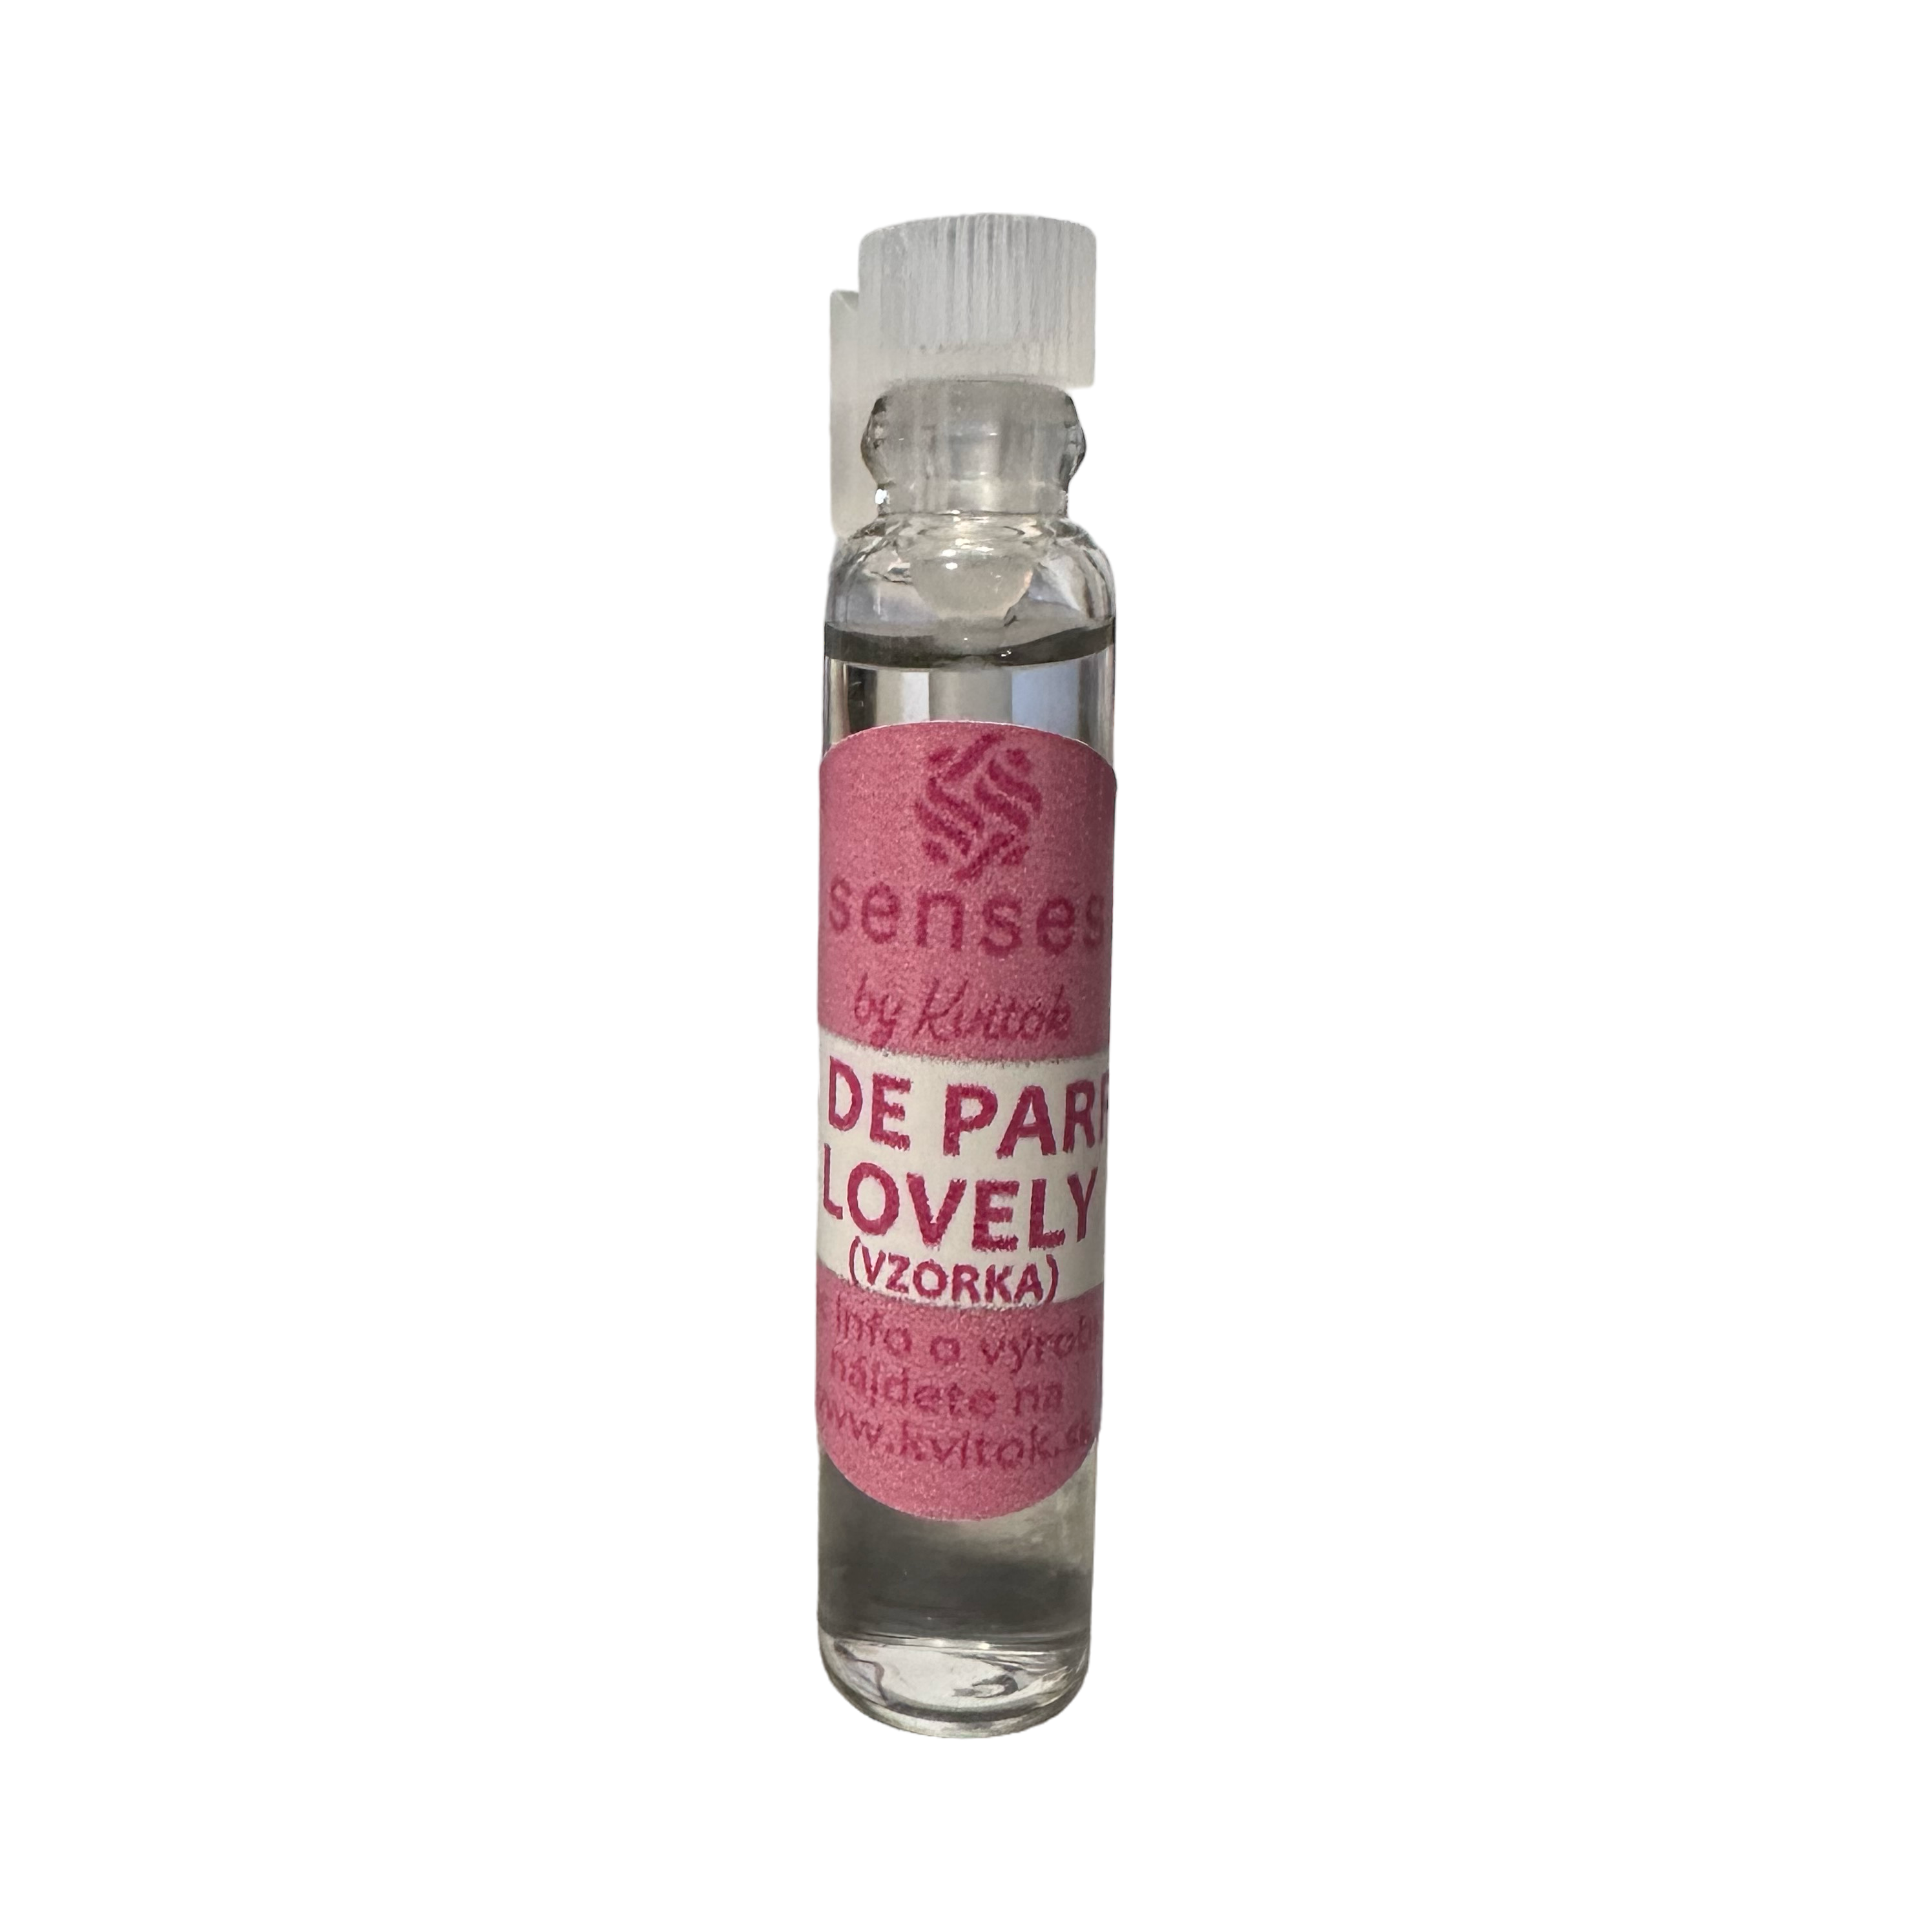 Kvitok Senses Toaletní parfém Lovely - vzorek (2 ml) - s vůní růže